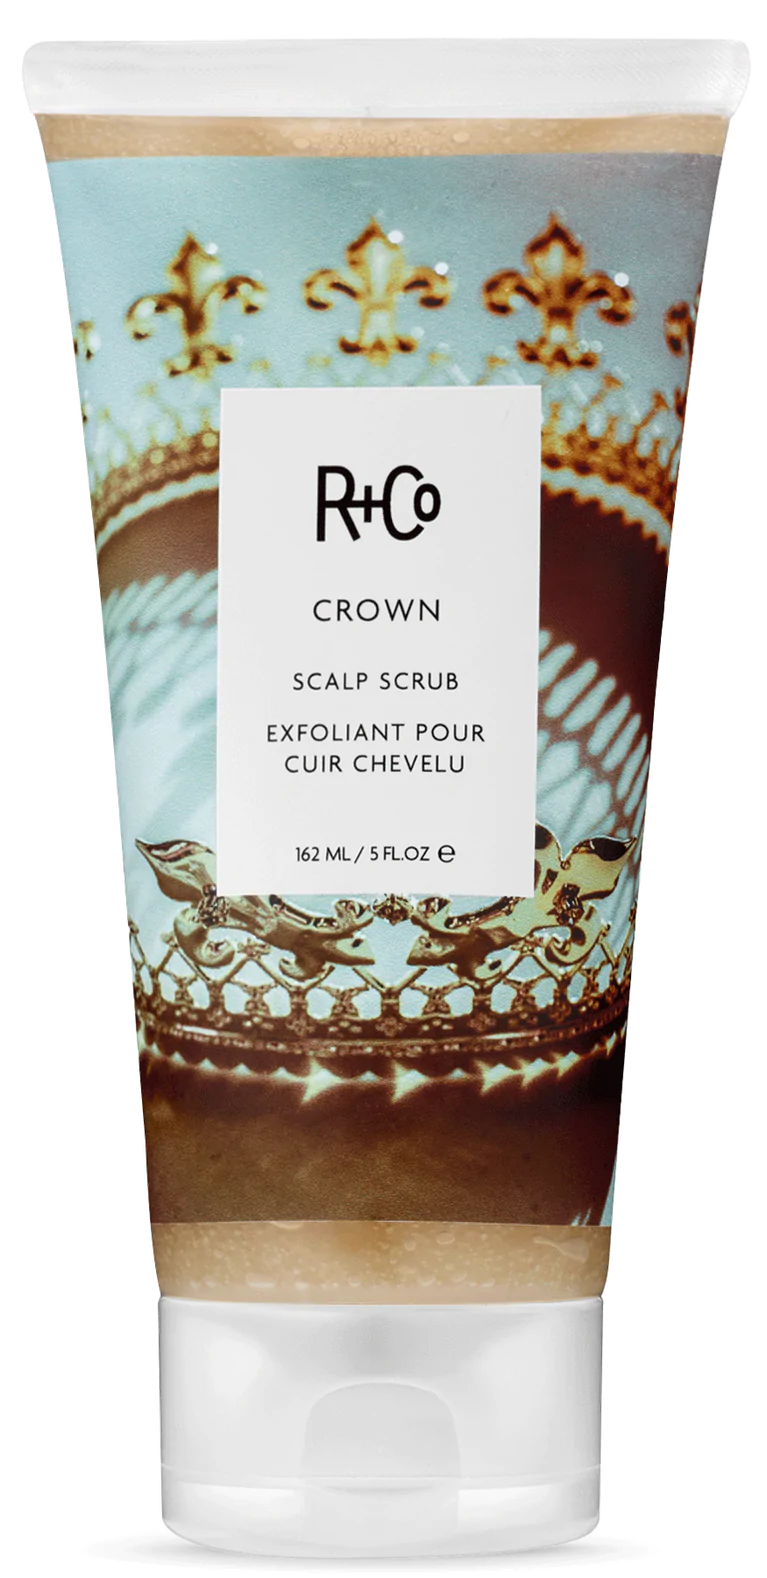 R+co crown